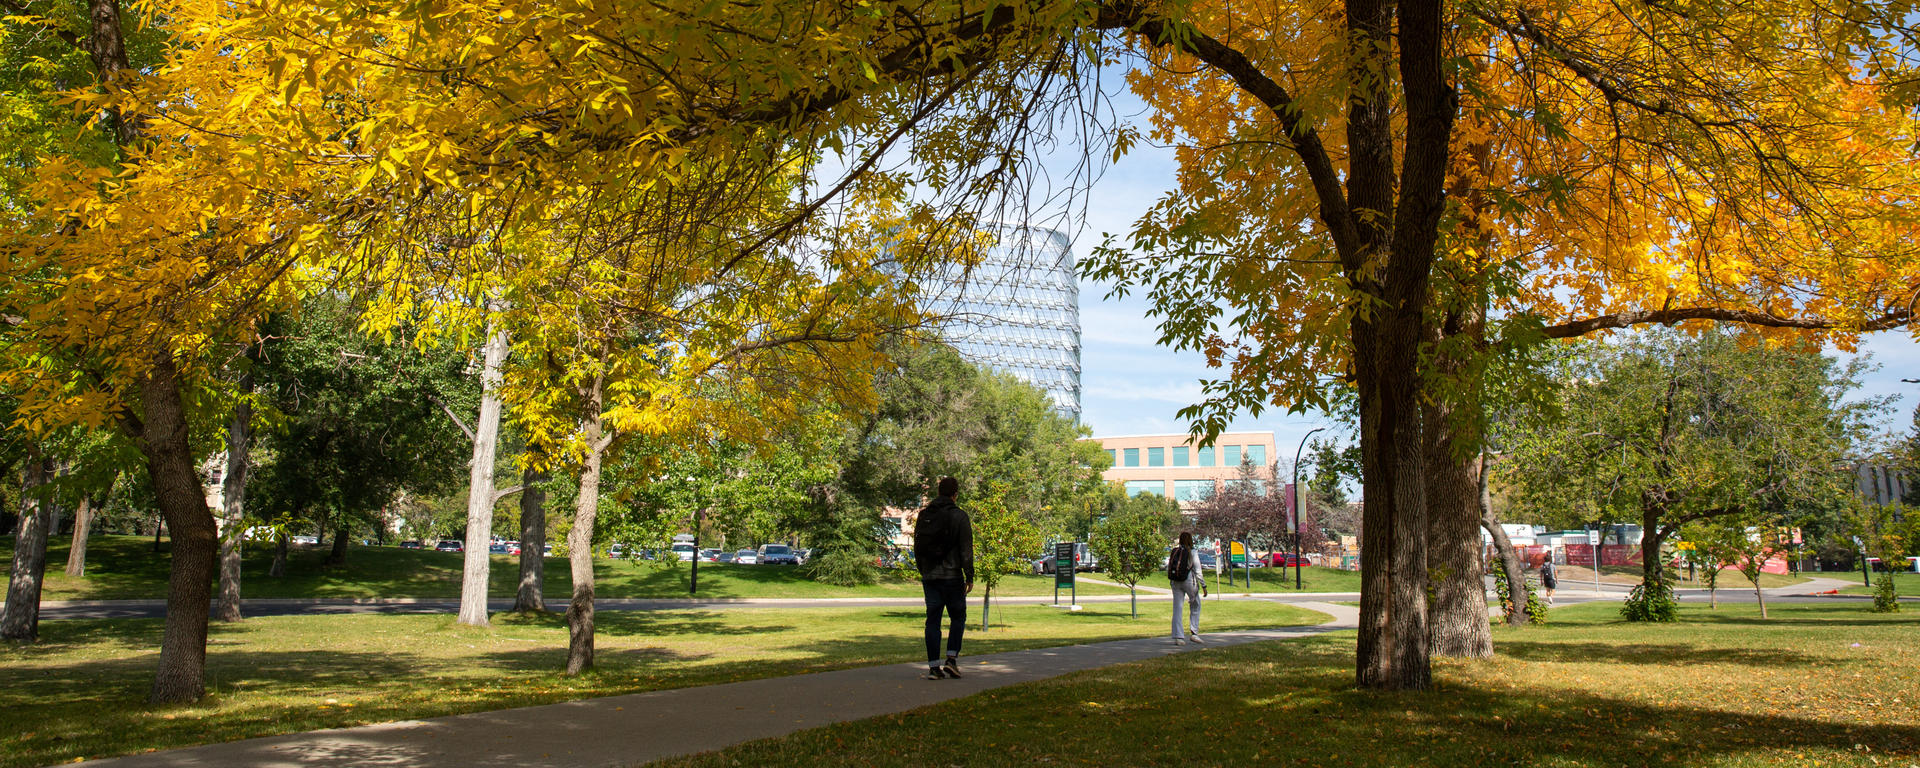 University of Calgary campus in fall